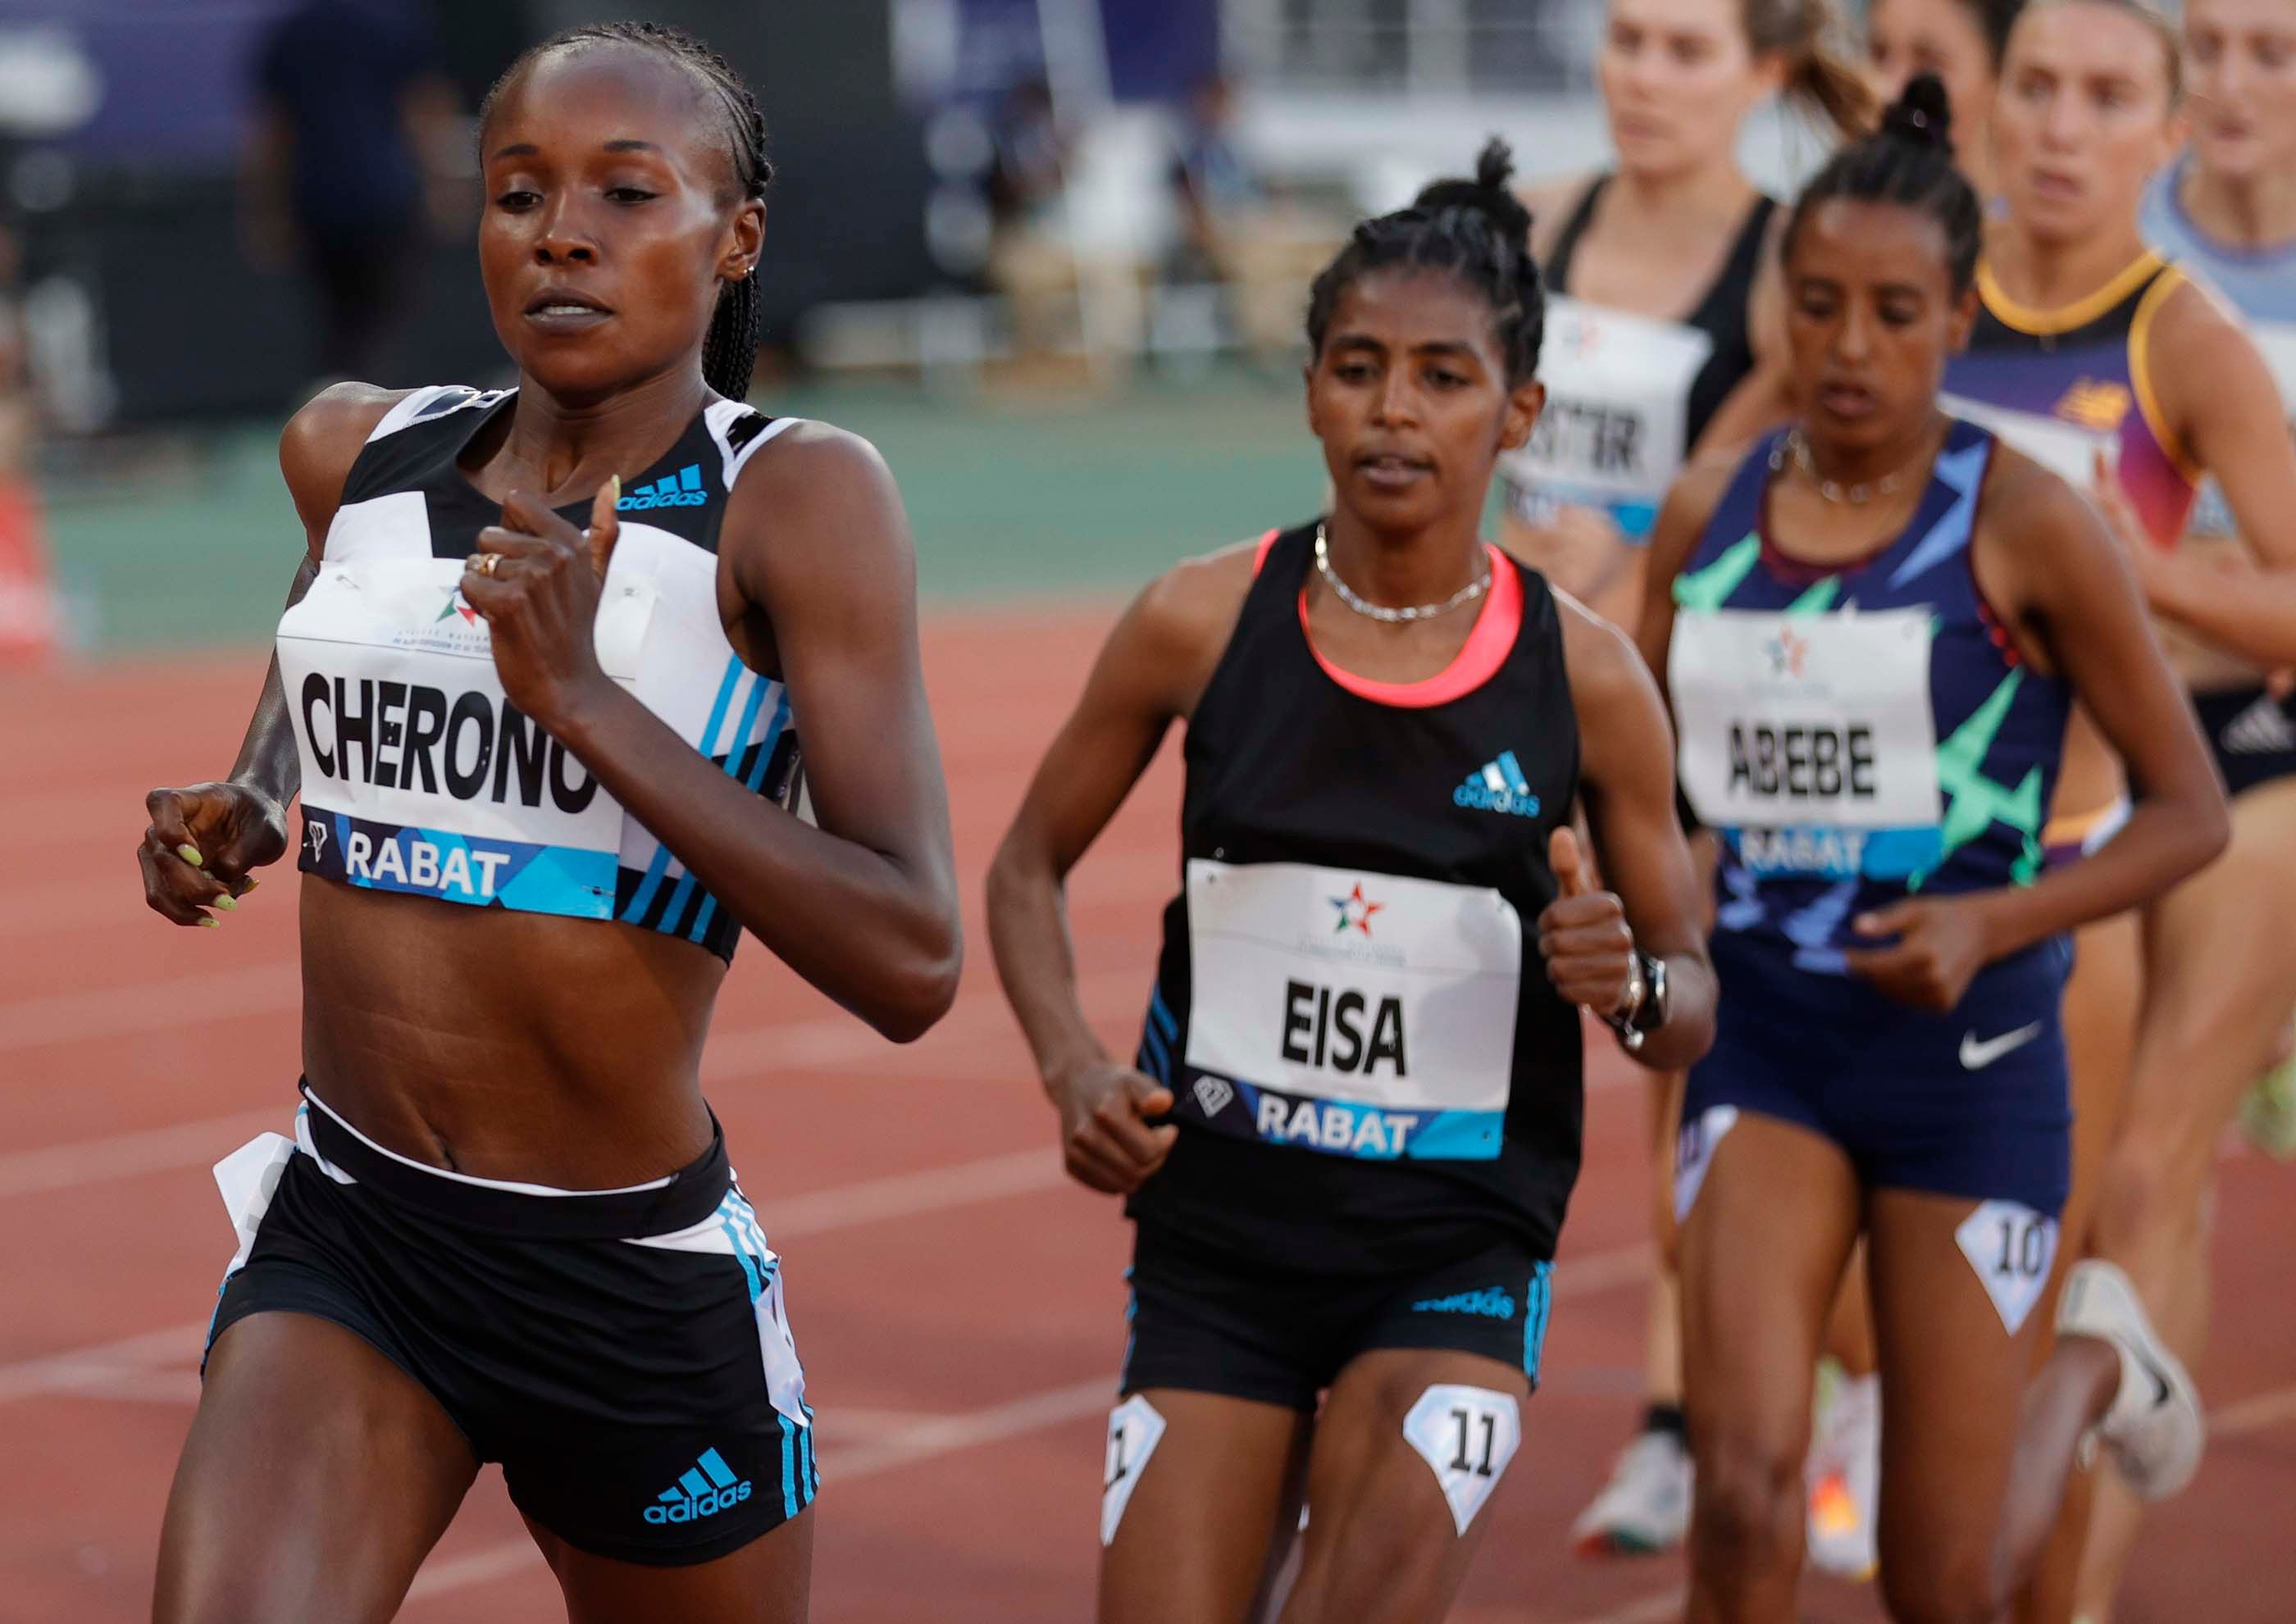 Tsiyon Abebe races behind Mercy Cherono and Medina Eisa in the 3000m at the Wanda Diamond League in Rabat